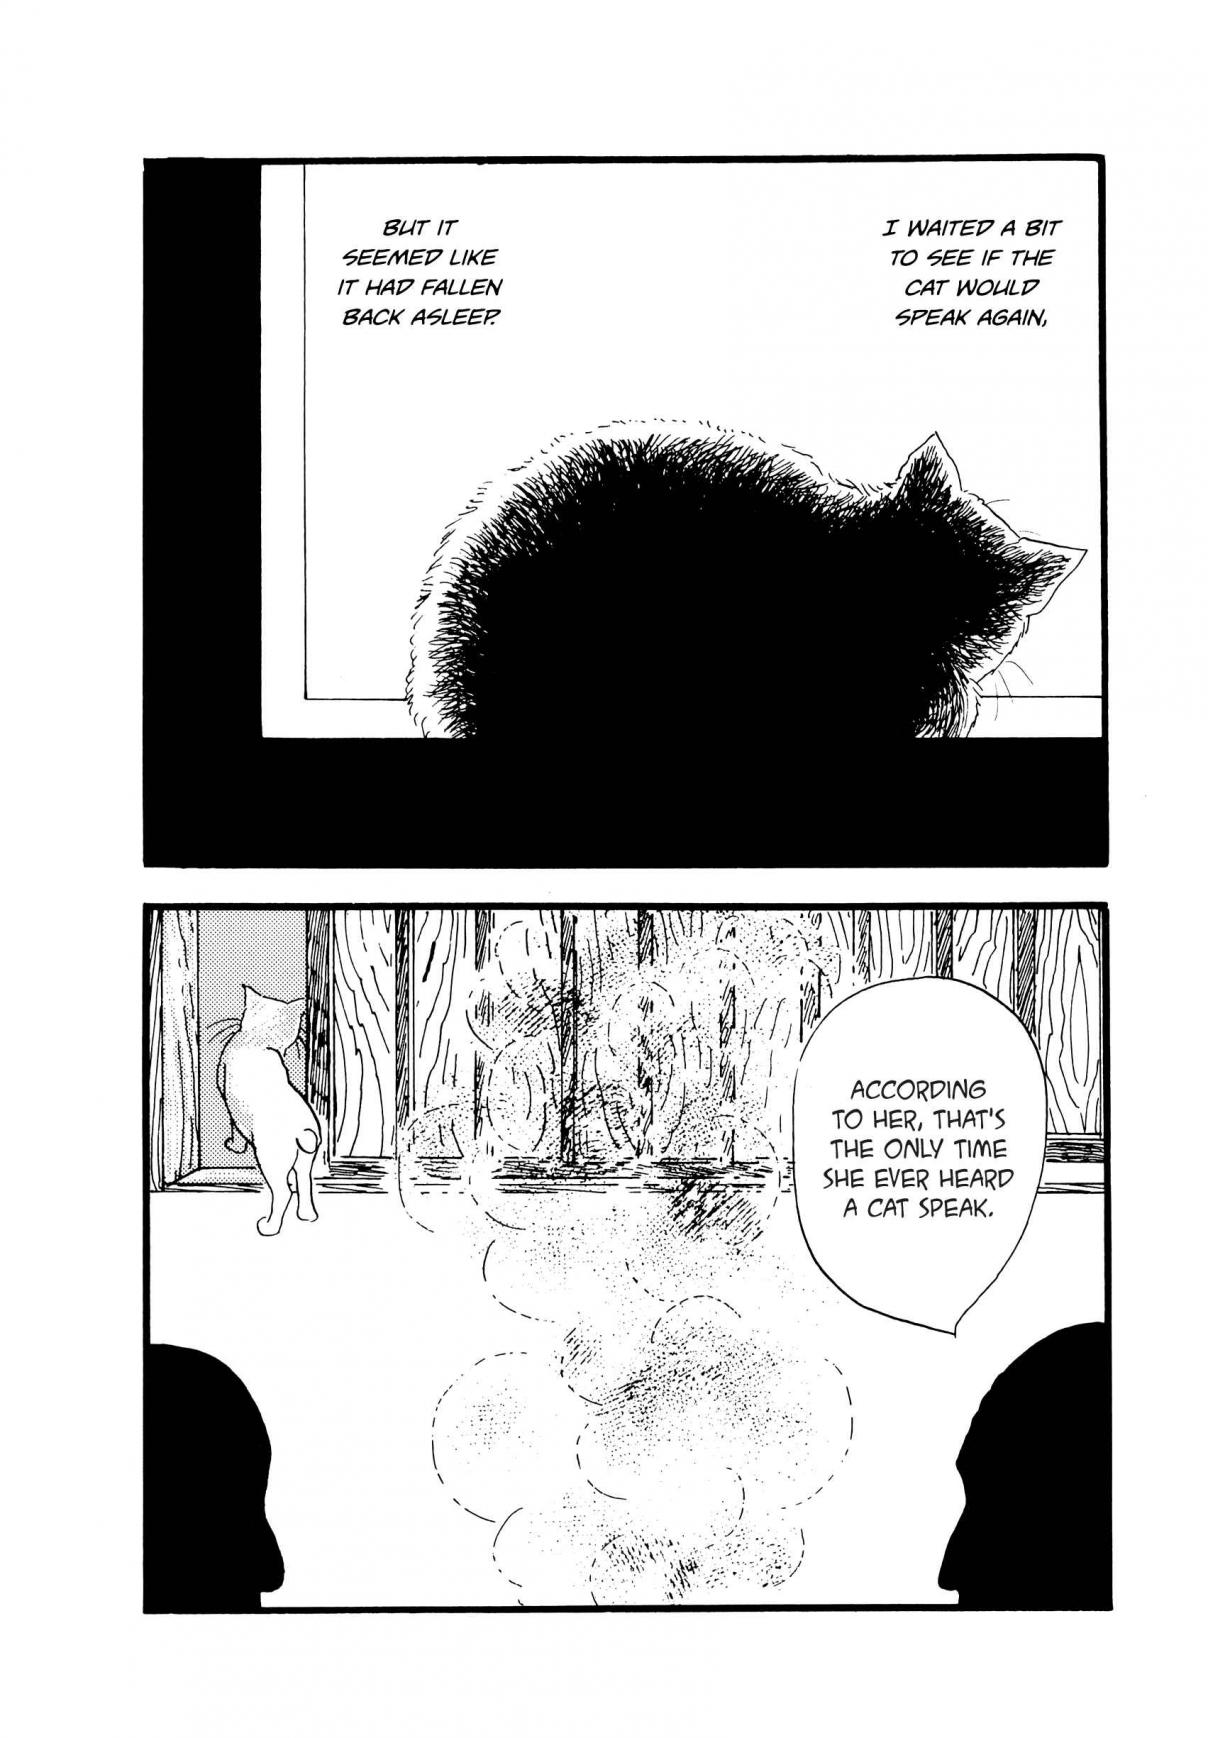 Hyaku Monogatari Vol. 1 Ch. 54 The Cat and the Old Woman